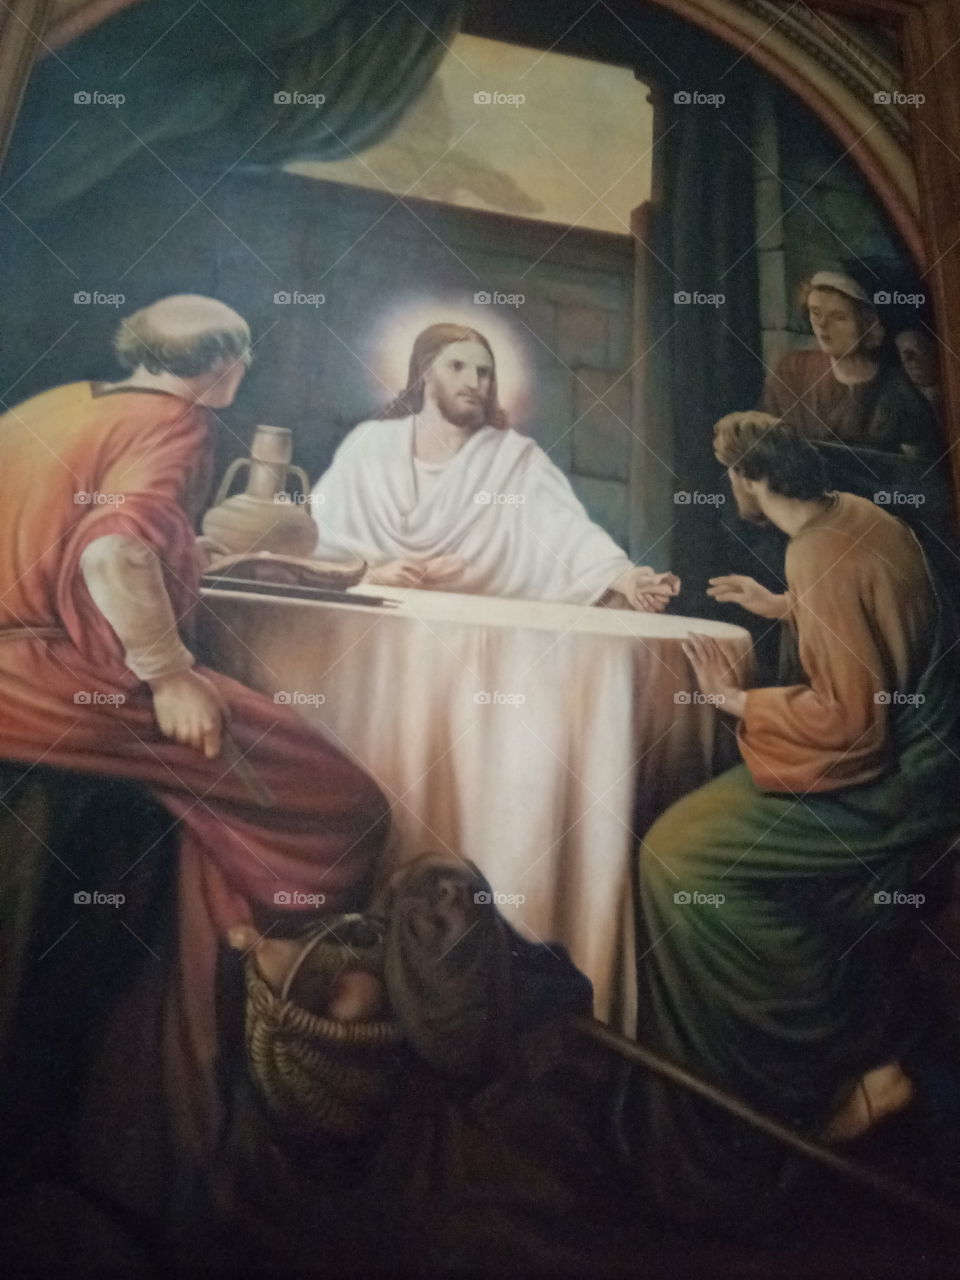 Jesus picture